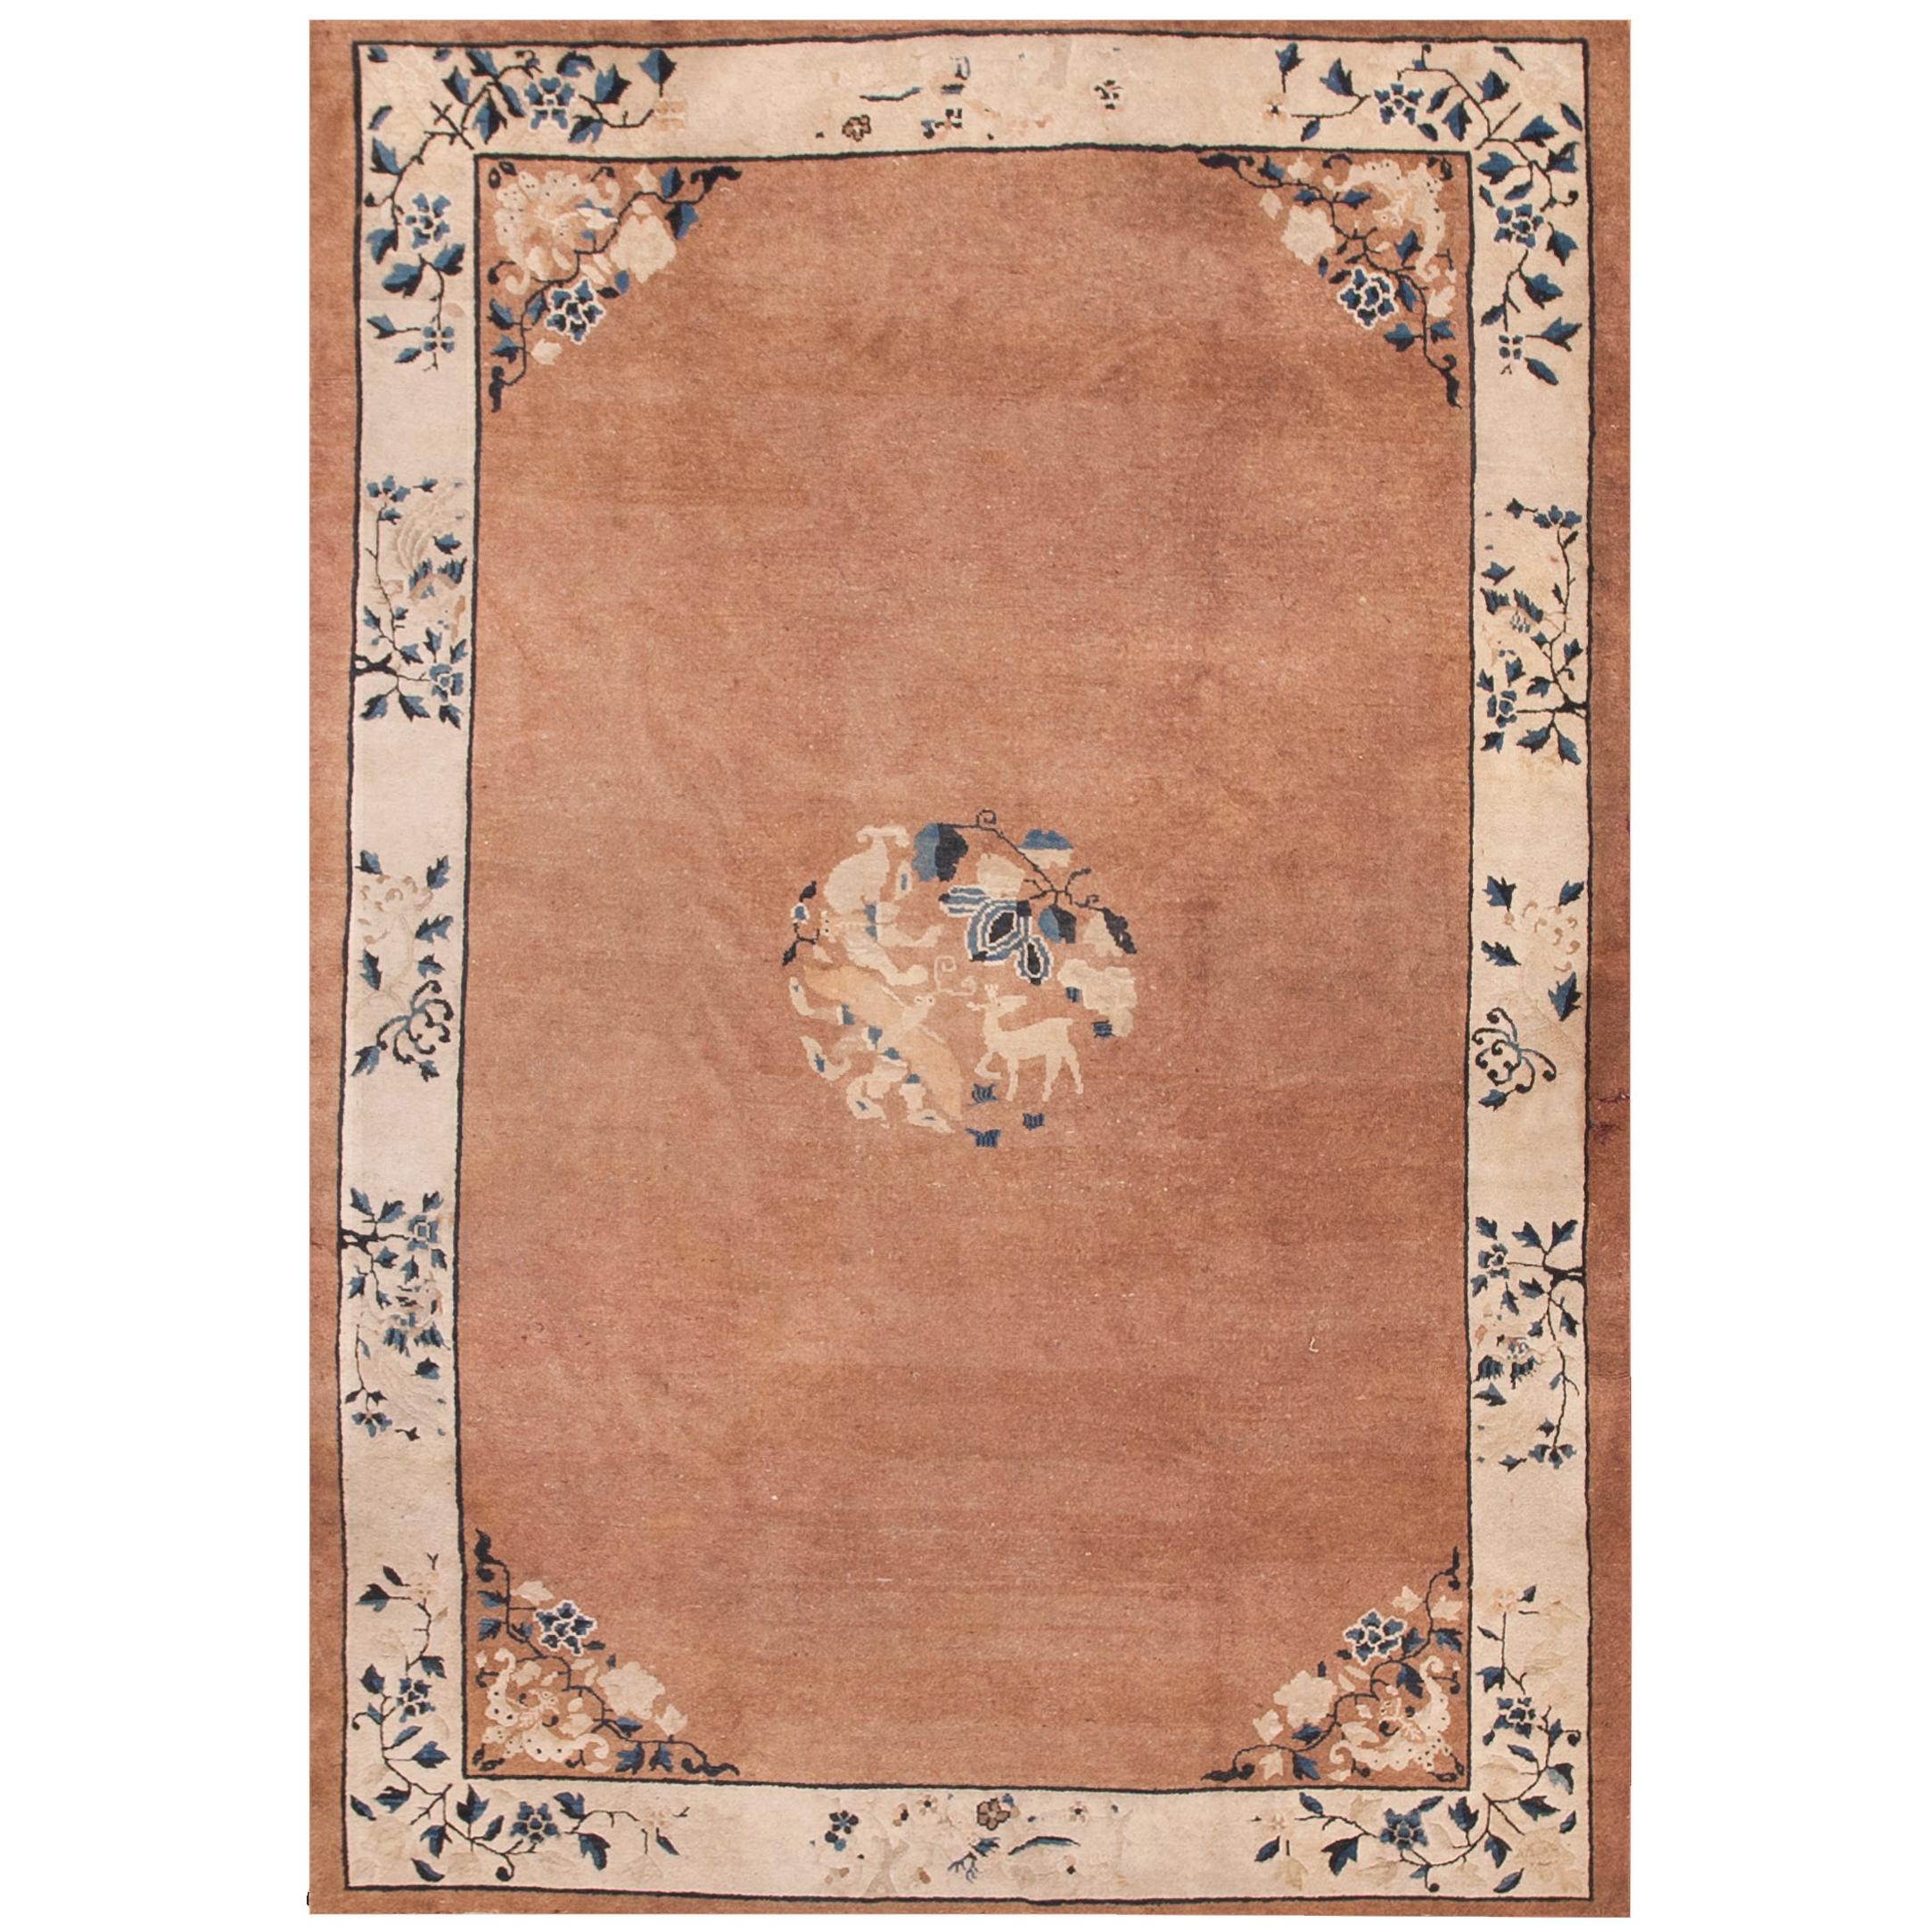 Early 20th Century Chinese Peking Carpet ( 6' x 8'8" - 183 x 265 )